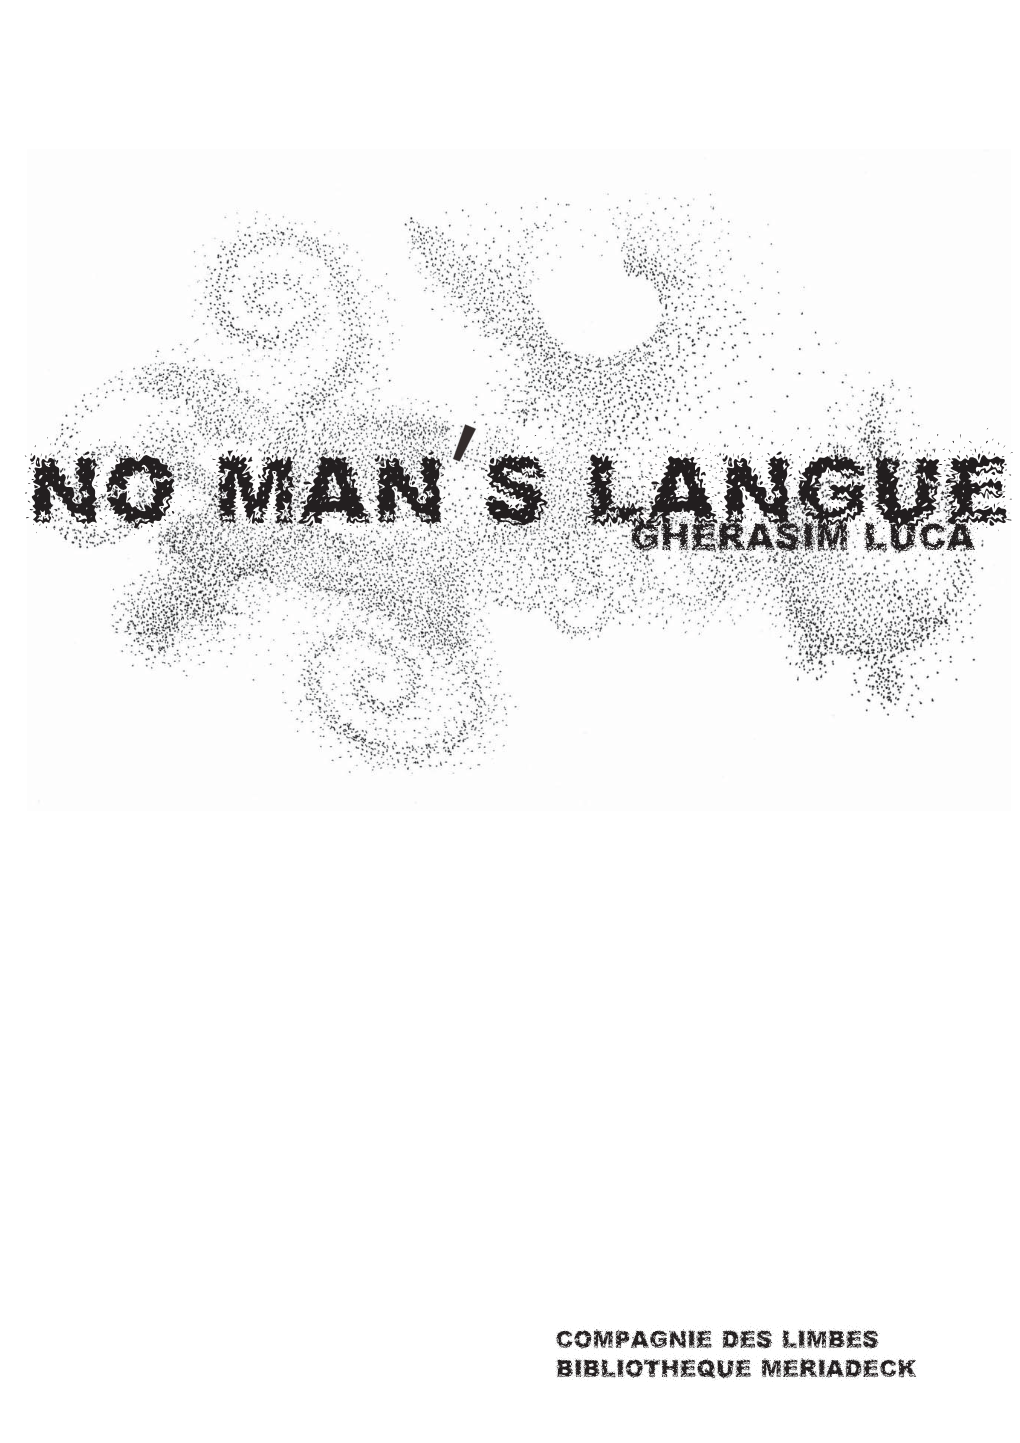 Dossier Nomans Langue3.Indd